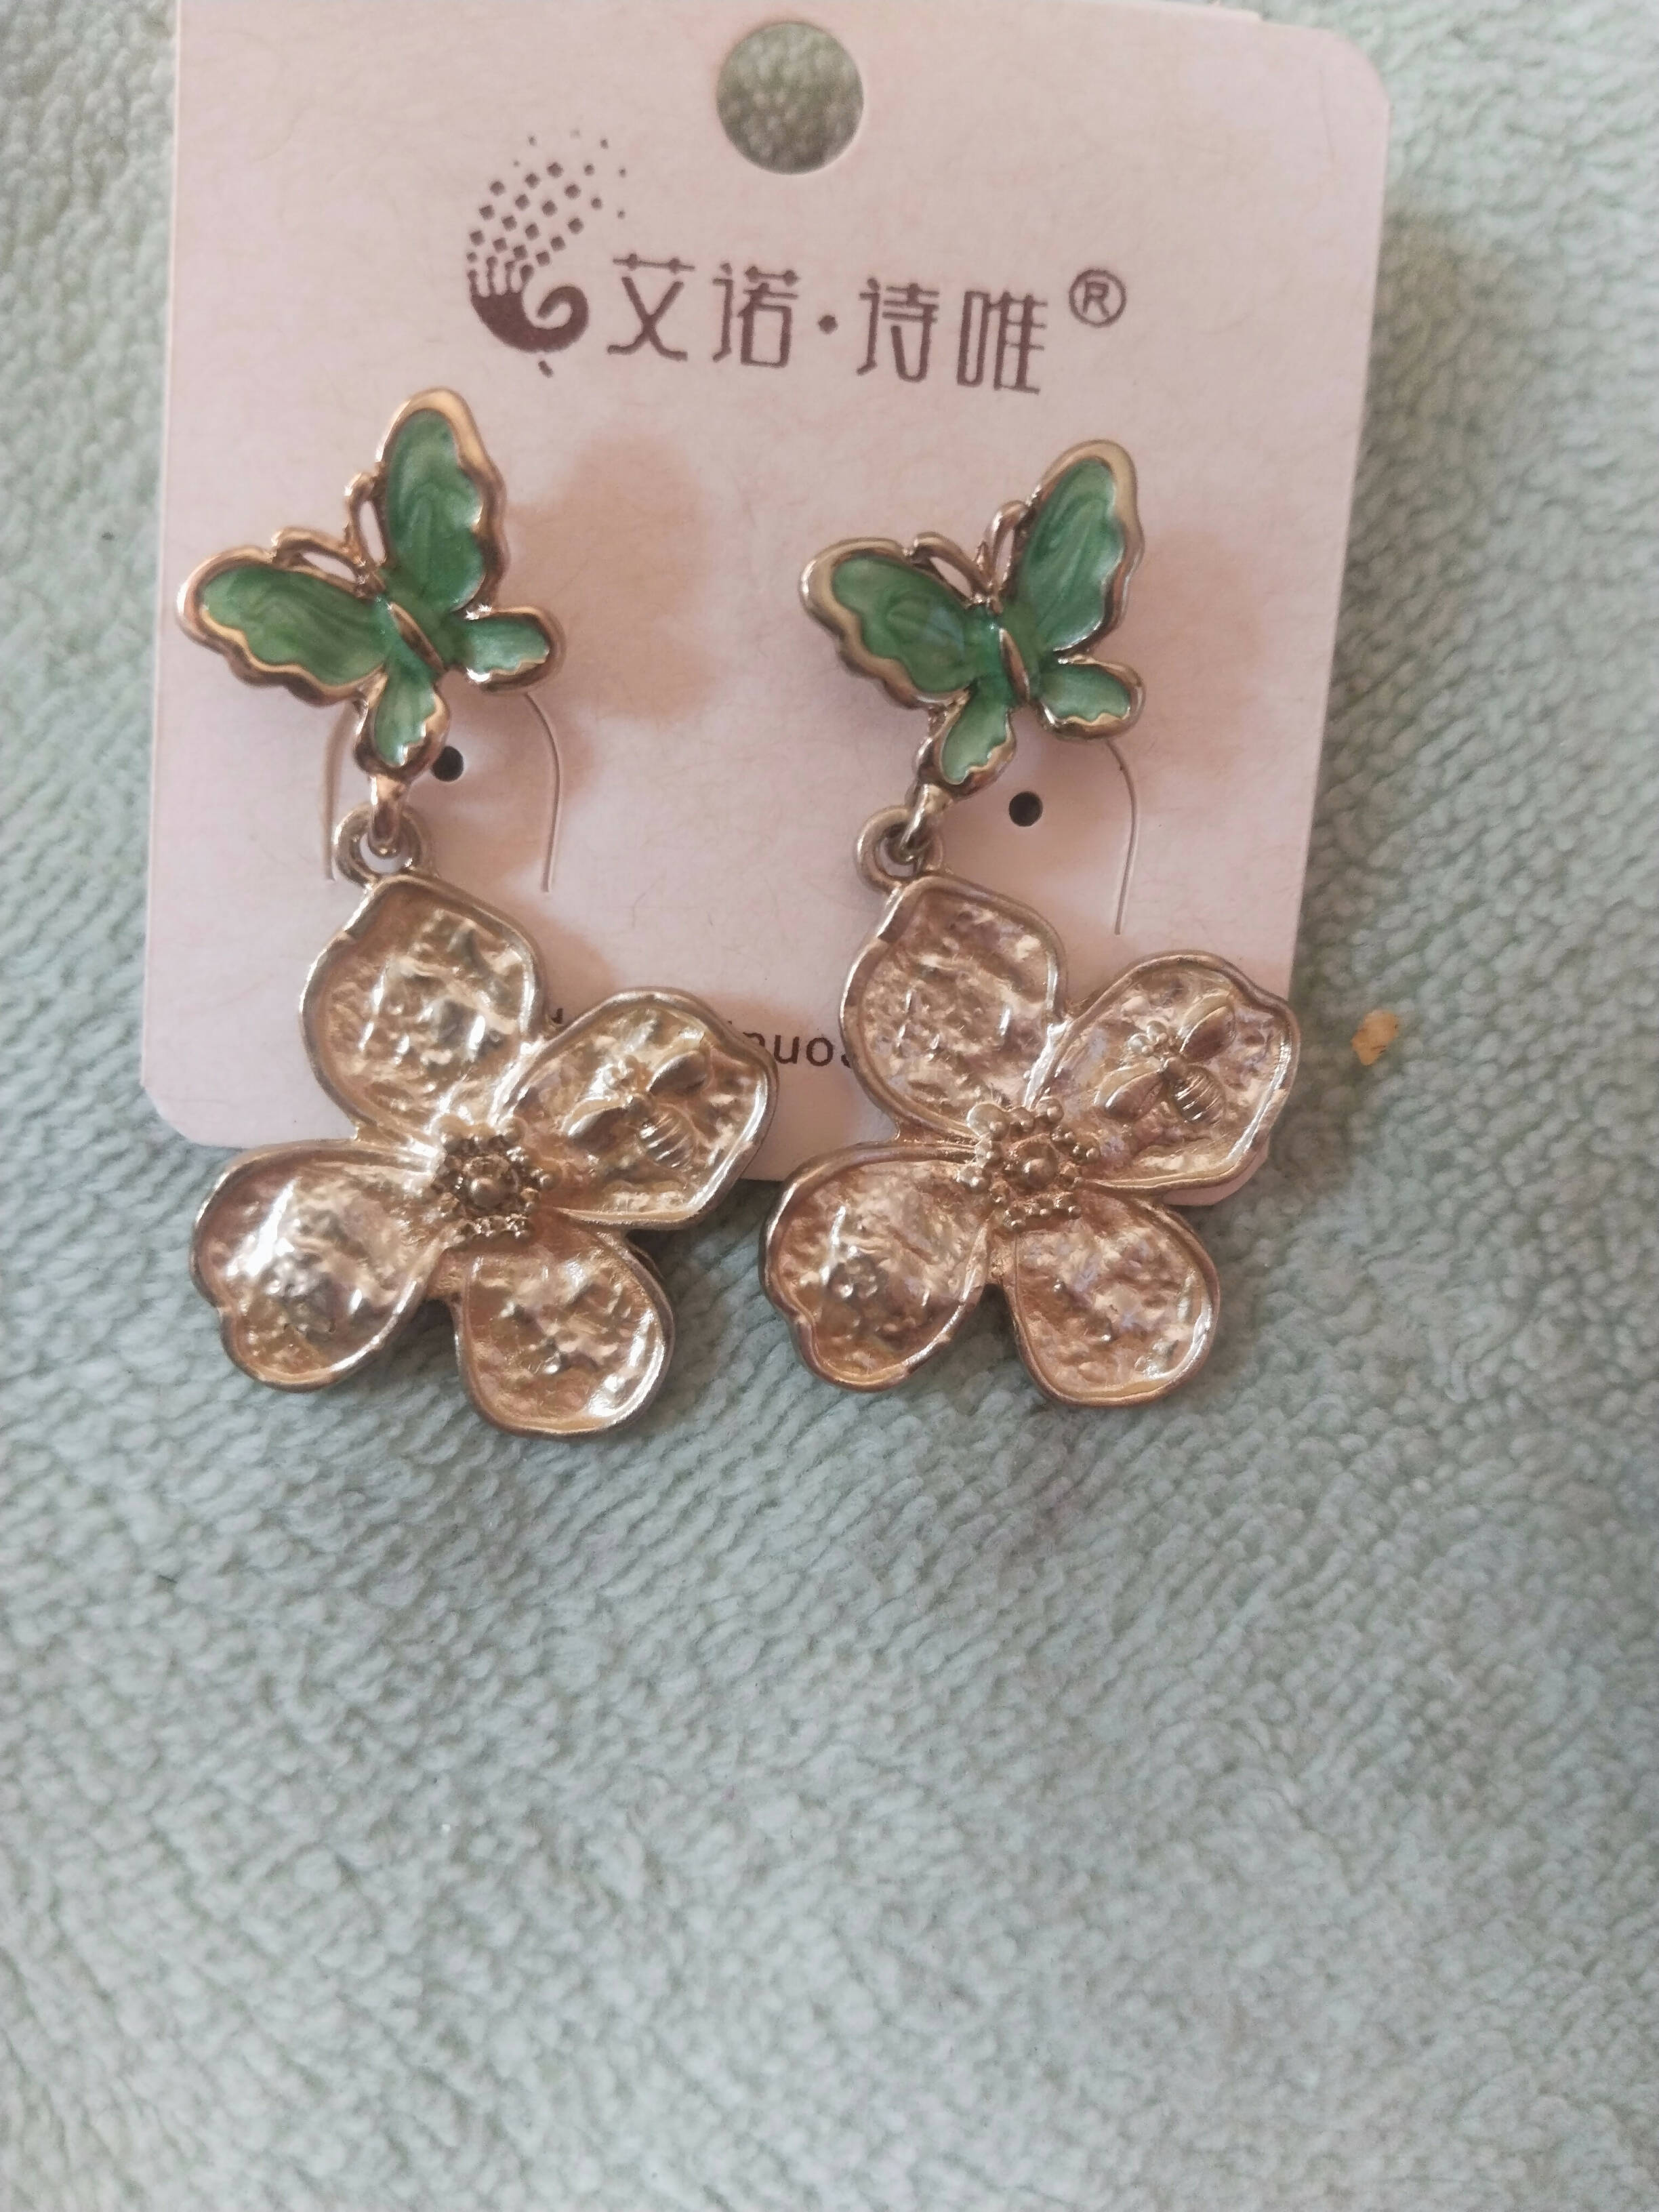 Beautiful Flower Shaped Earrings | Women Jewelry | Brand New With Tags